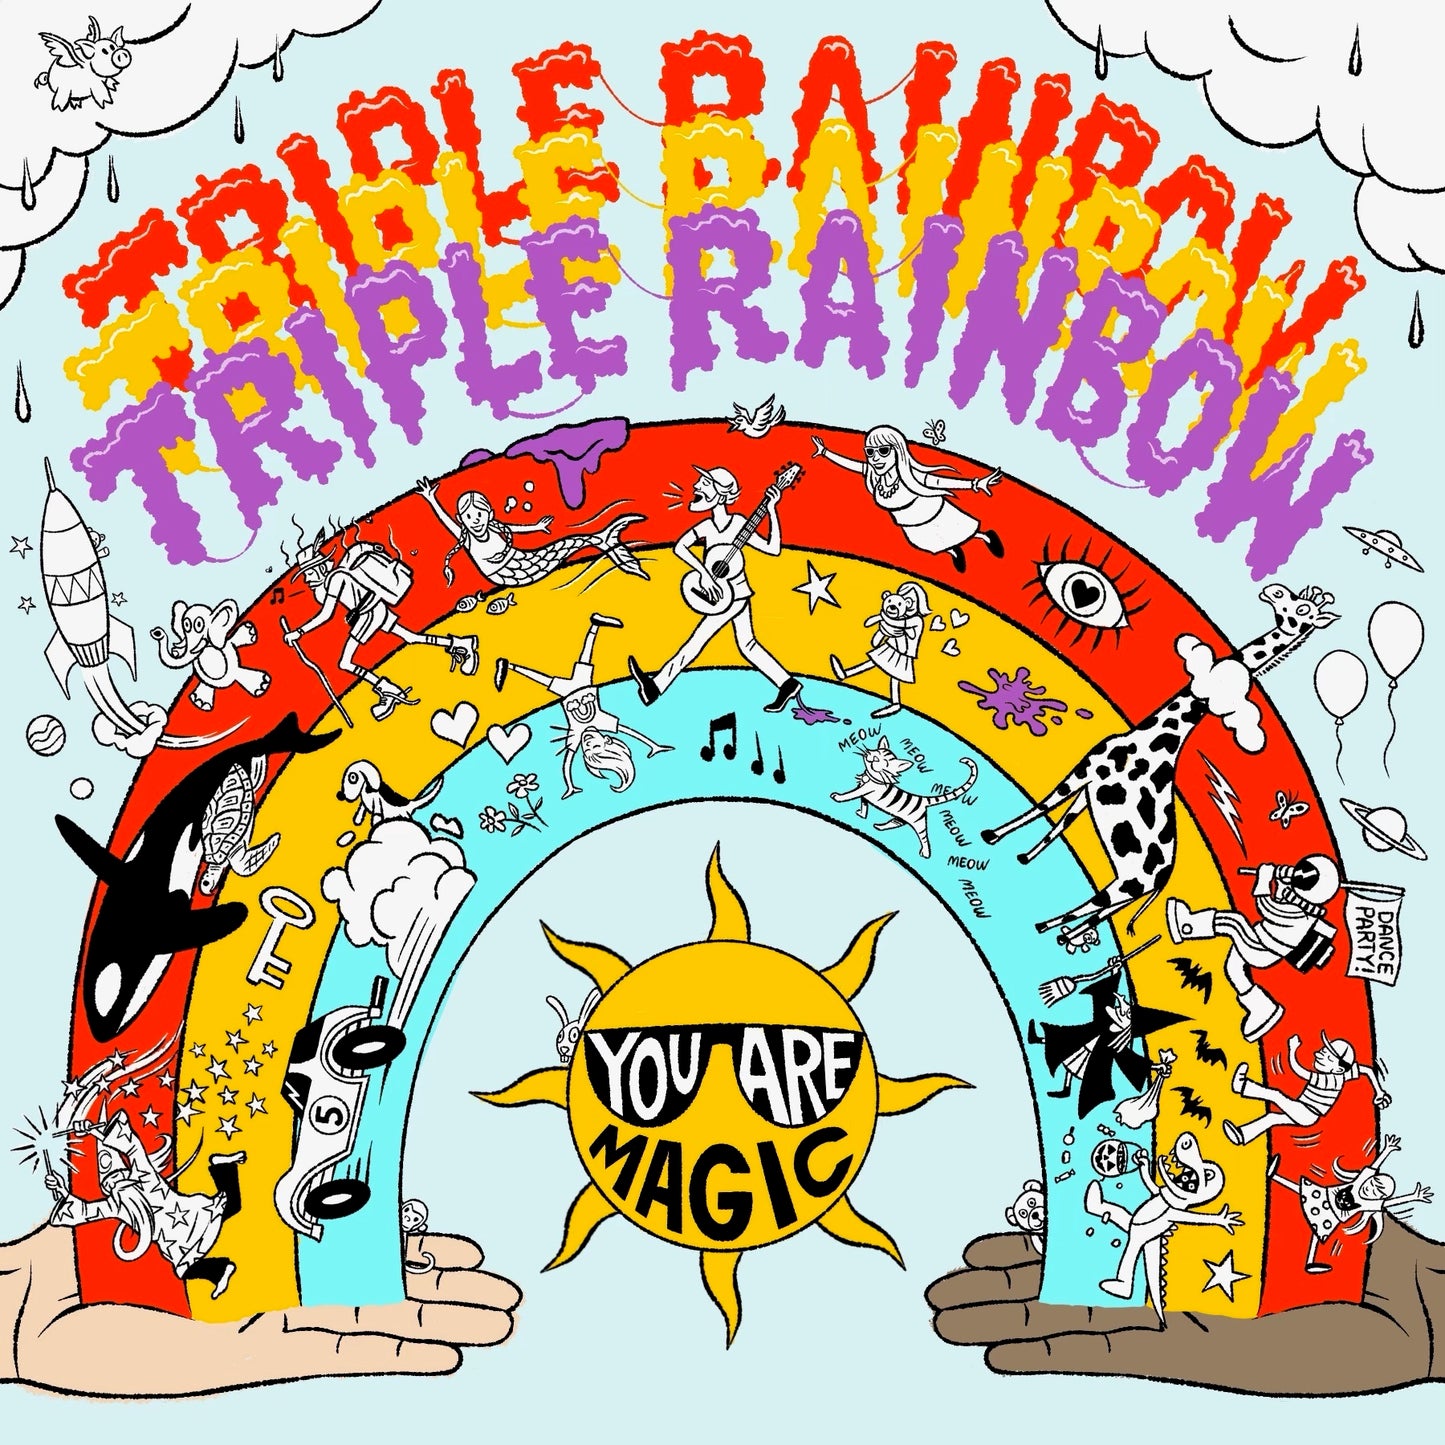 Triple Rainbow - You Are  Magic